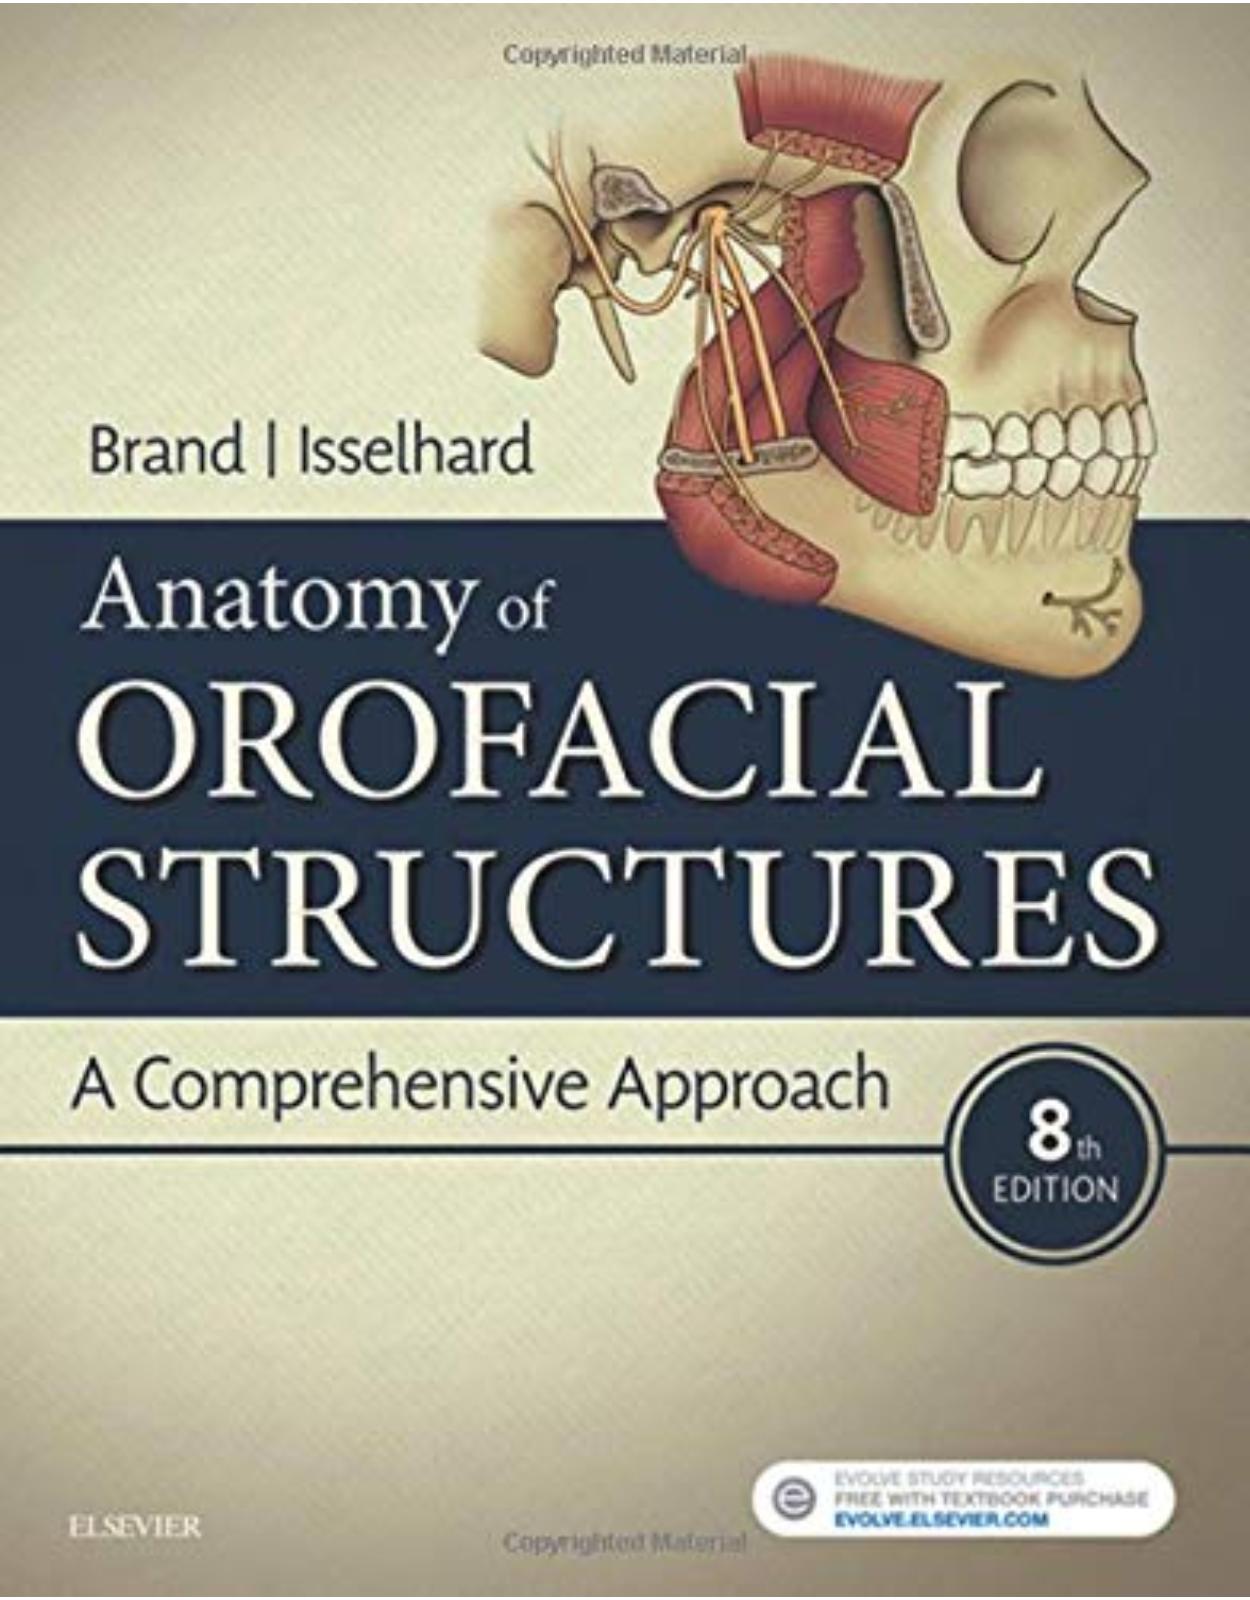 Anatomy of Orofacial Structures: A Comprehensive Approach, 8e